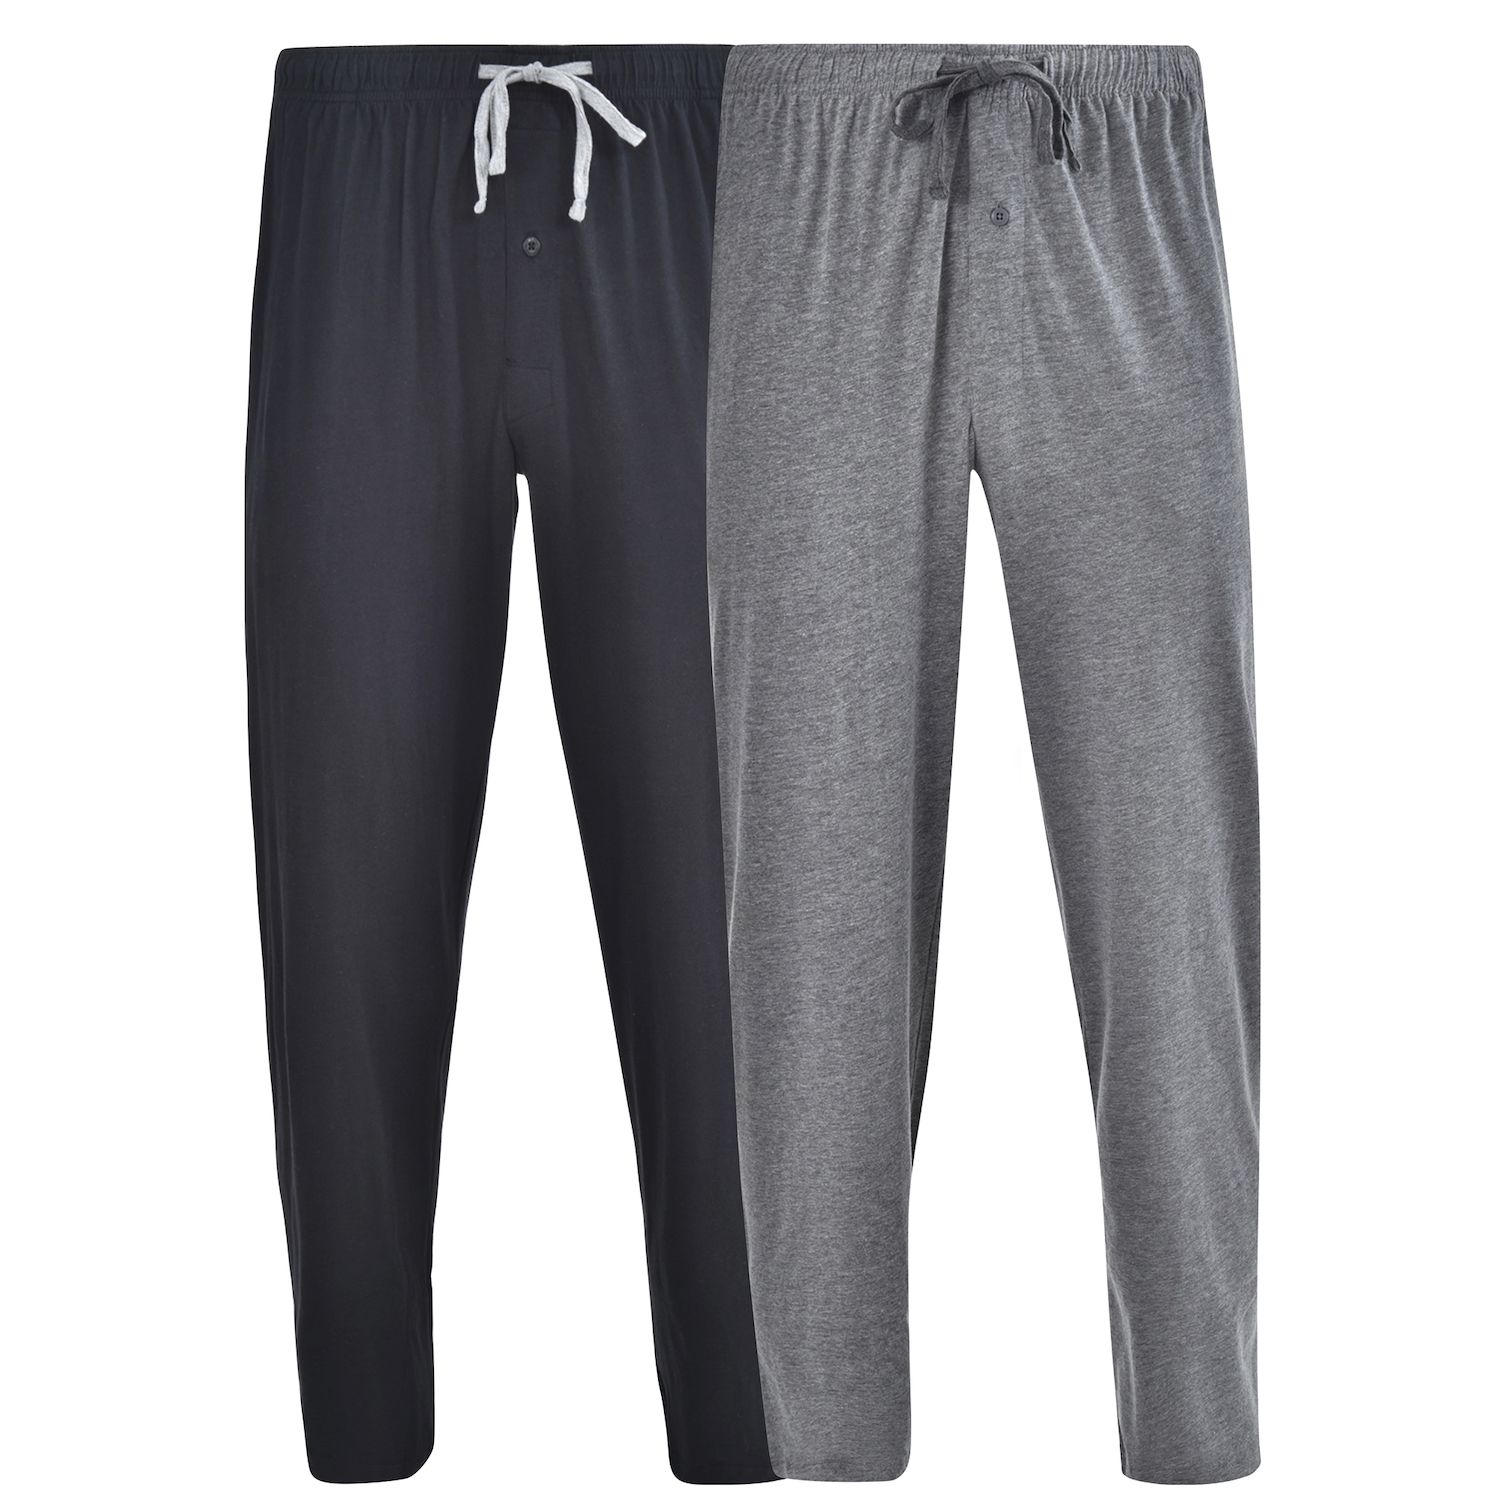 Image for Hanes Big & Tall 2-pack Solid Knit Pajama Pants at Kohl's.